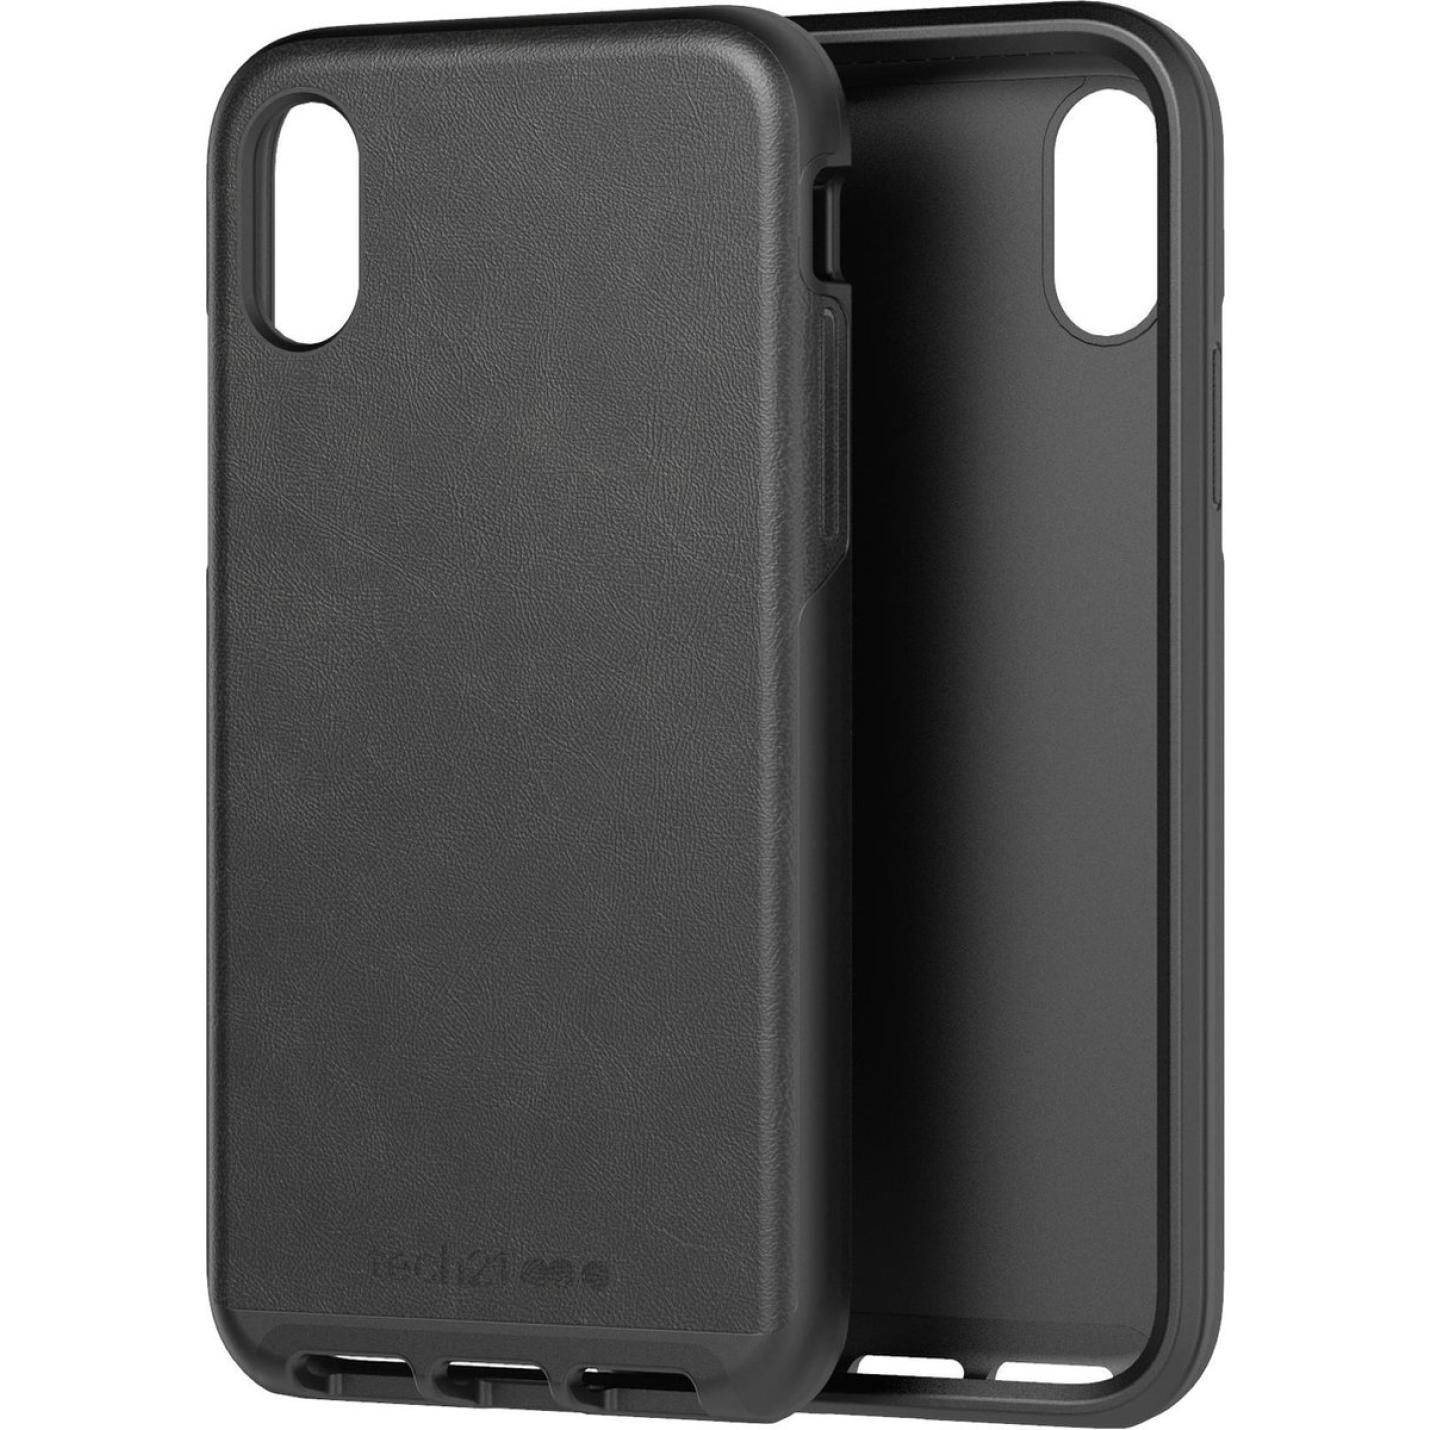 Tech21 Evo Luxe Black Leather backcover voor iPhone X-Xs - zwart 2